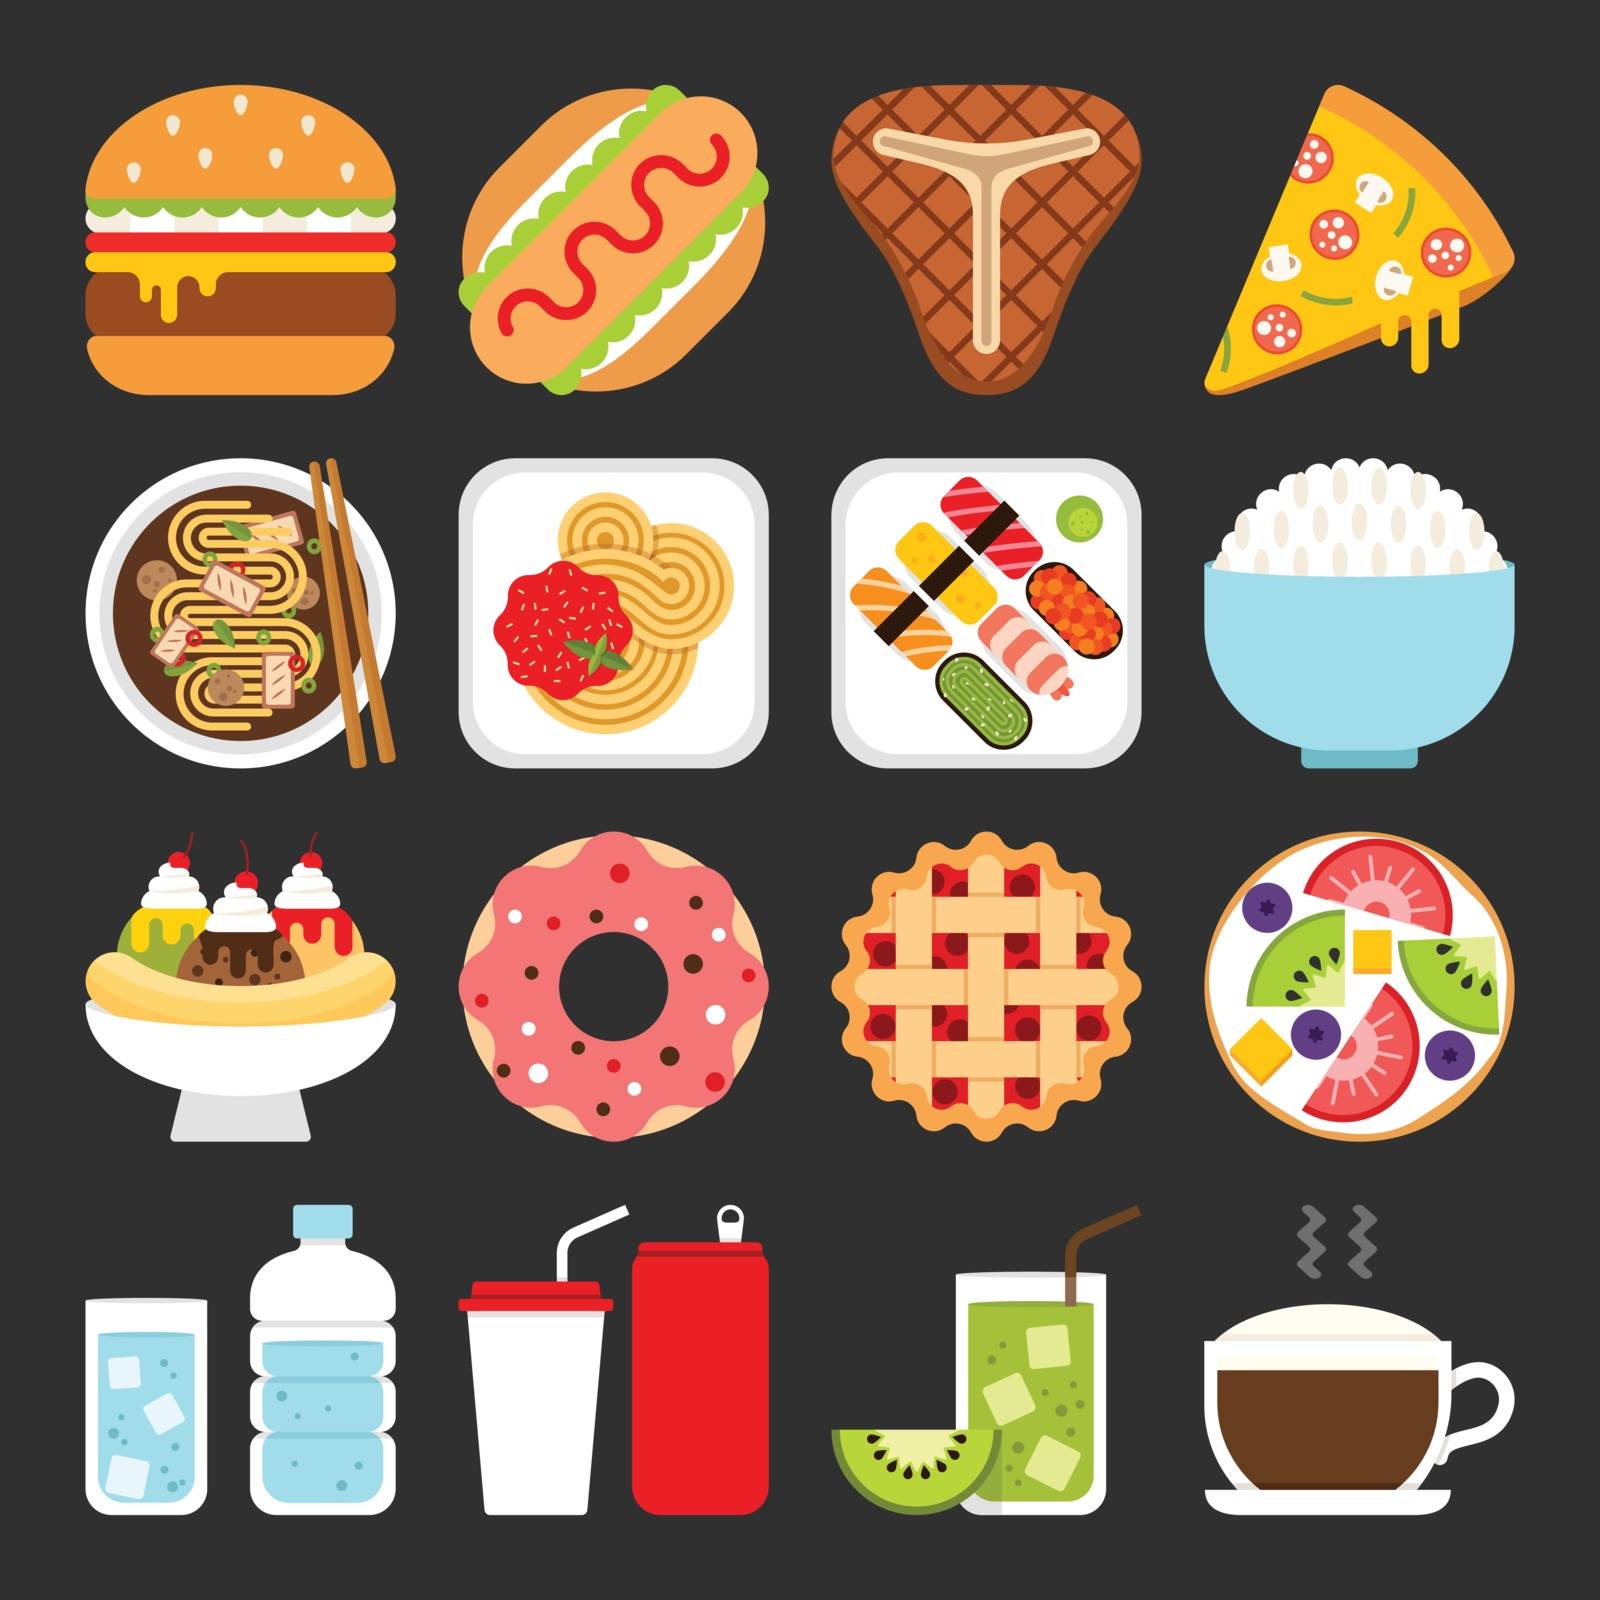 Food icons by kanlayavadee